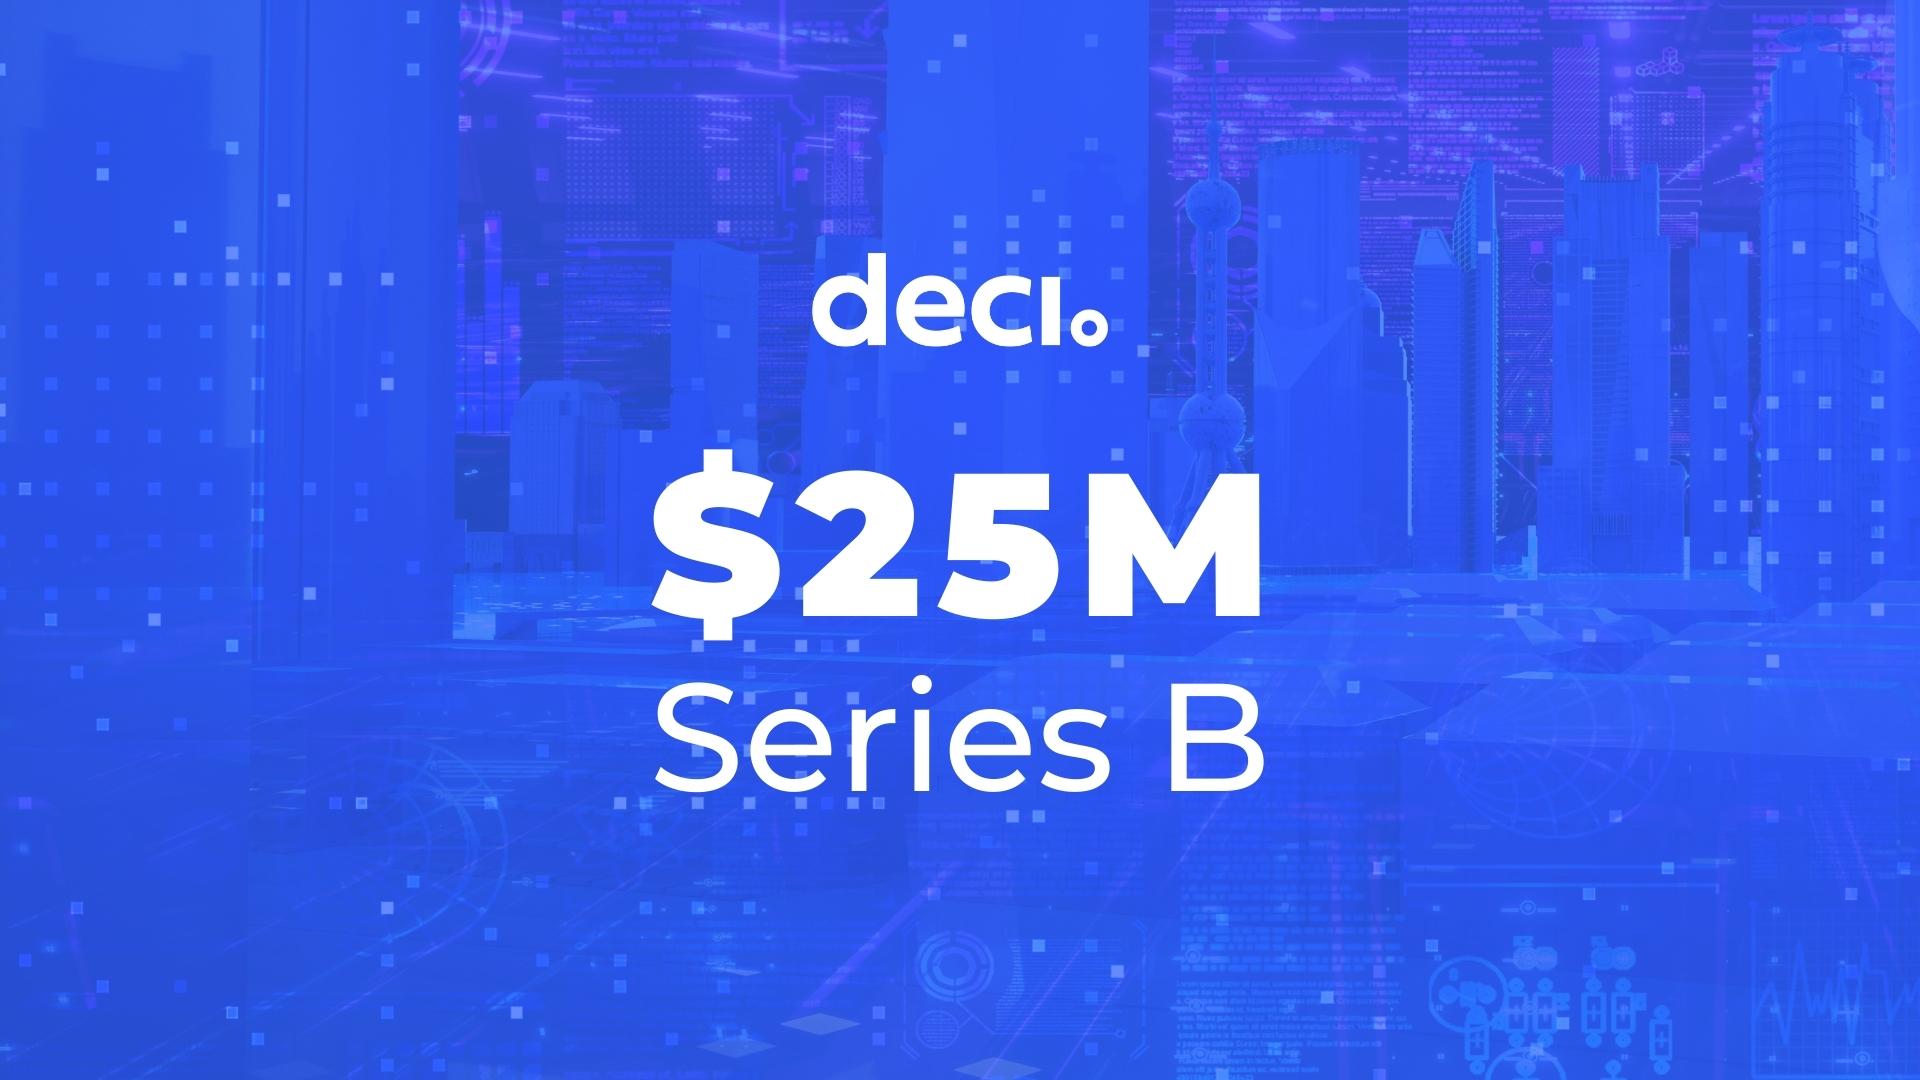 deci-series-b-funding-featured-1